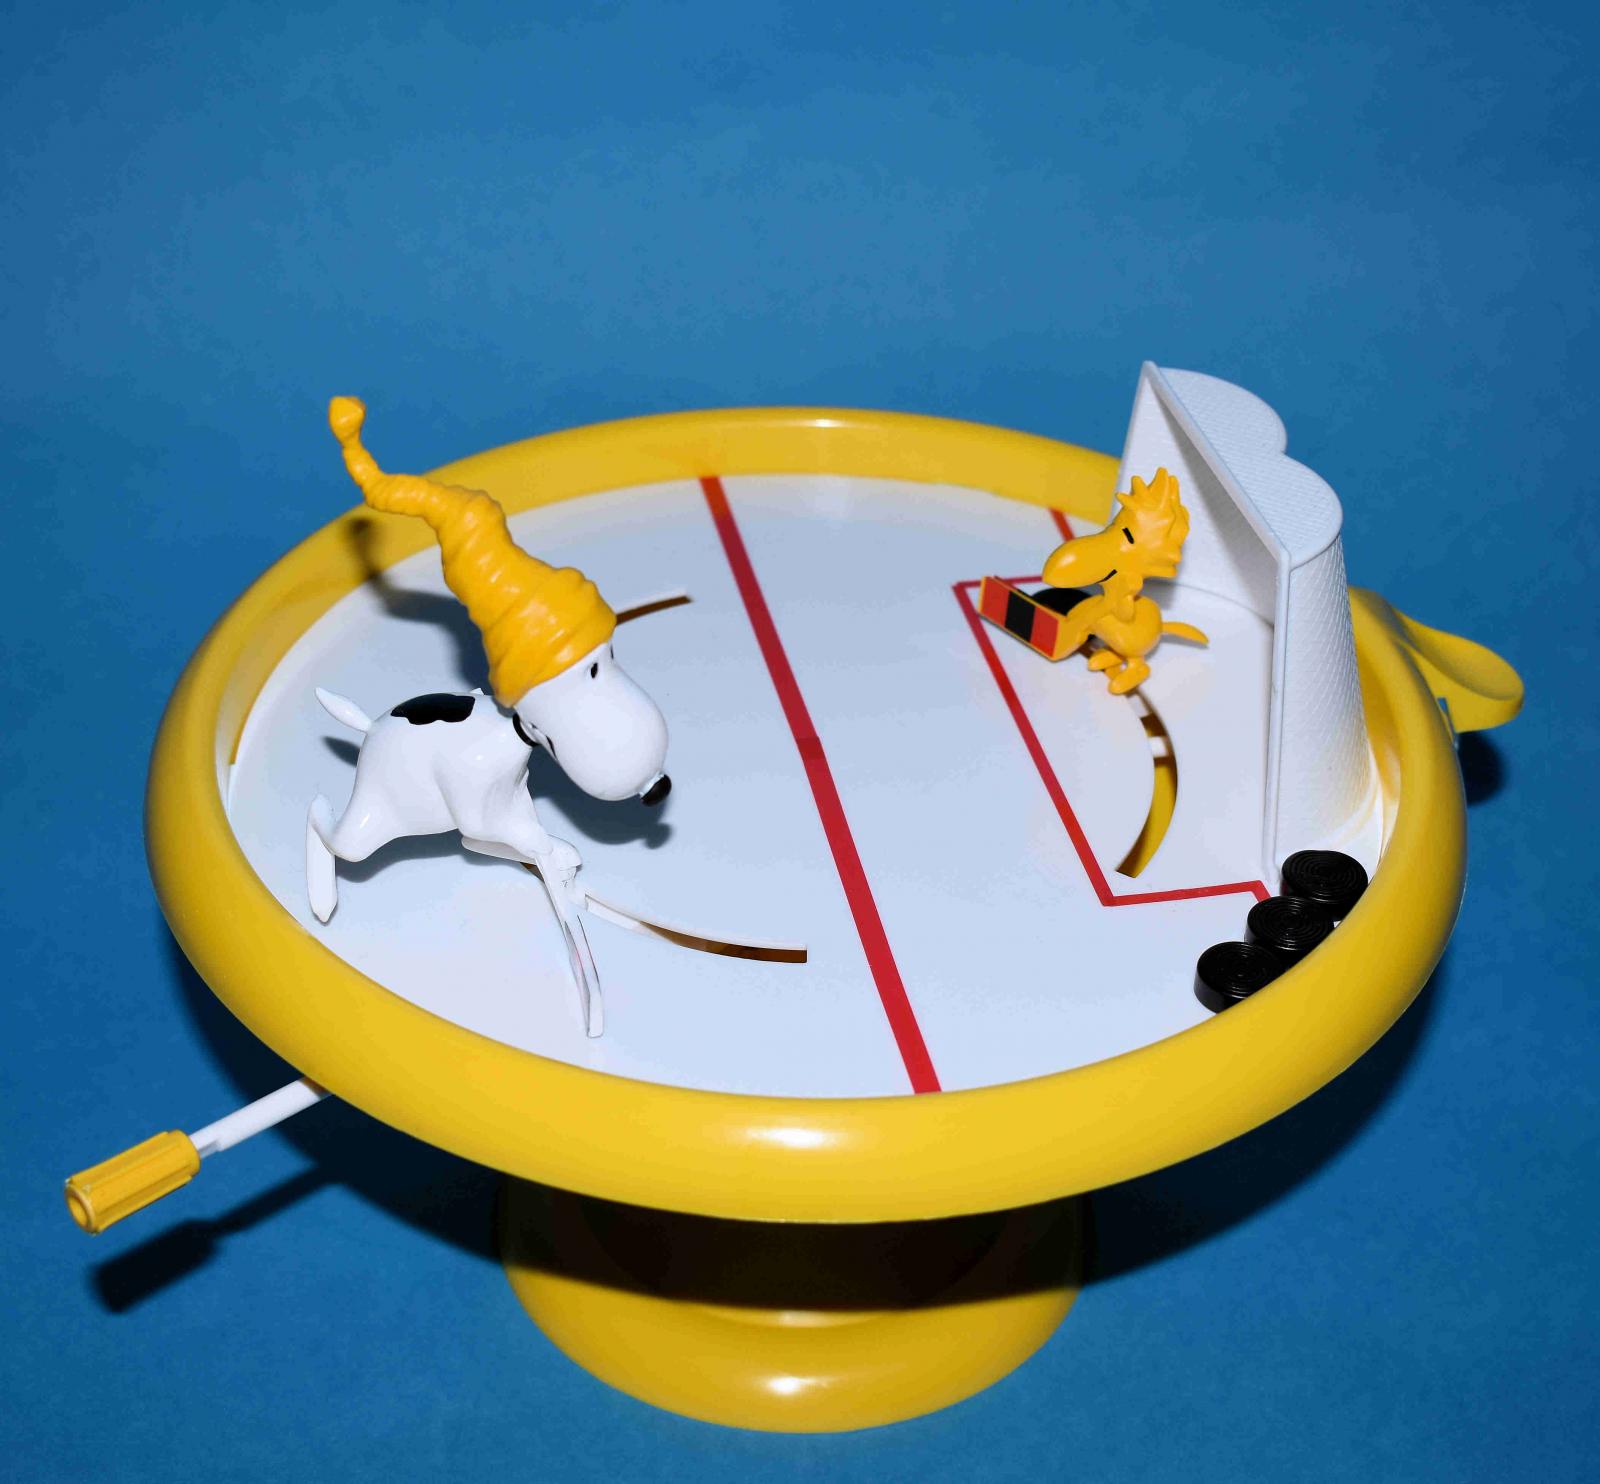 Atlantis 5696 Peanuts Snoopy and Woodstock Bird Bath Ice Hockey Game Model Kit for sale online 